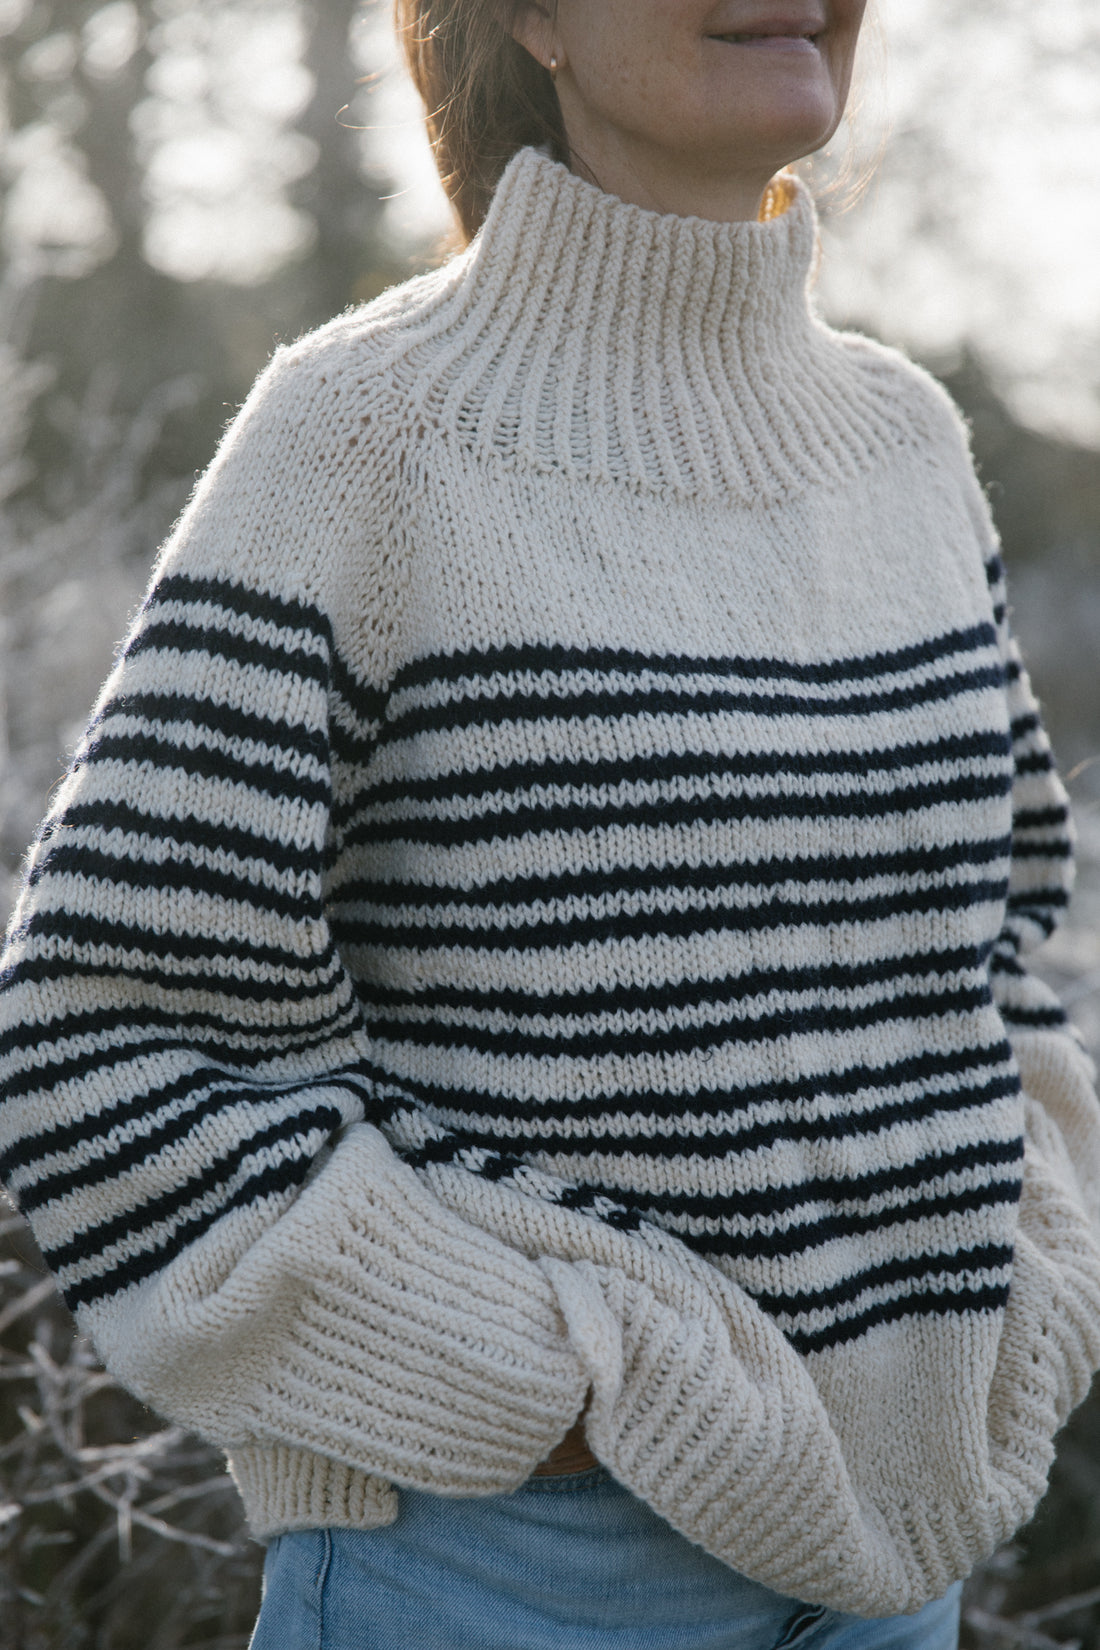 The Copenhagen Sweater knitting kit